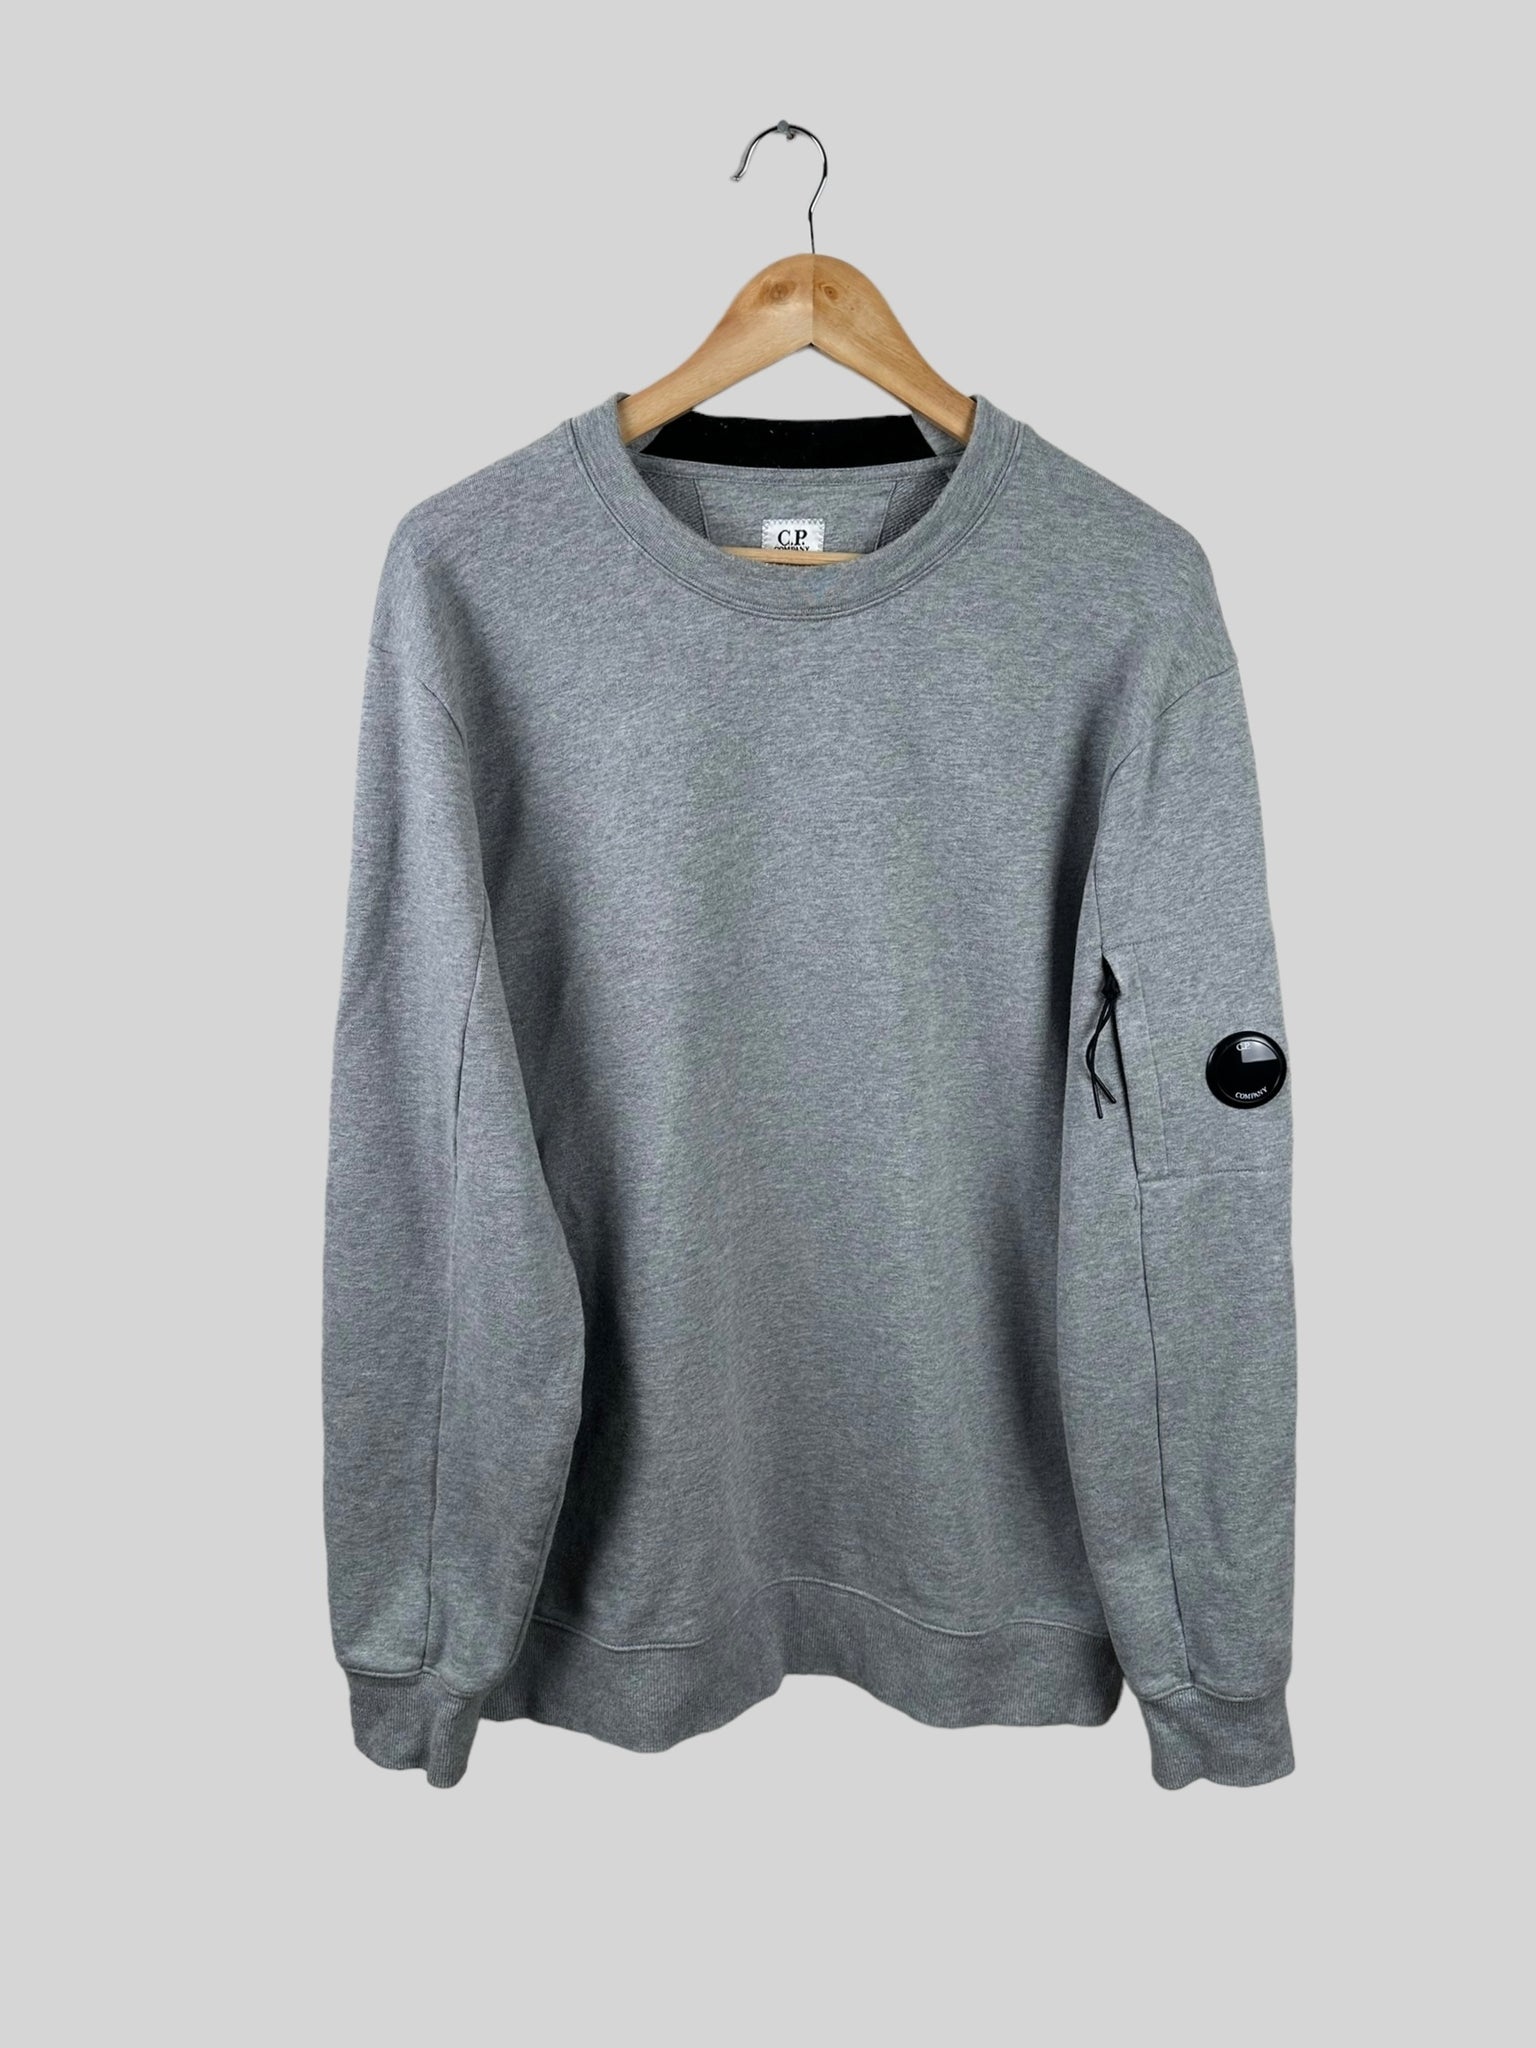 CP Company Sweatshirt - XXL